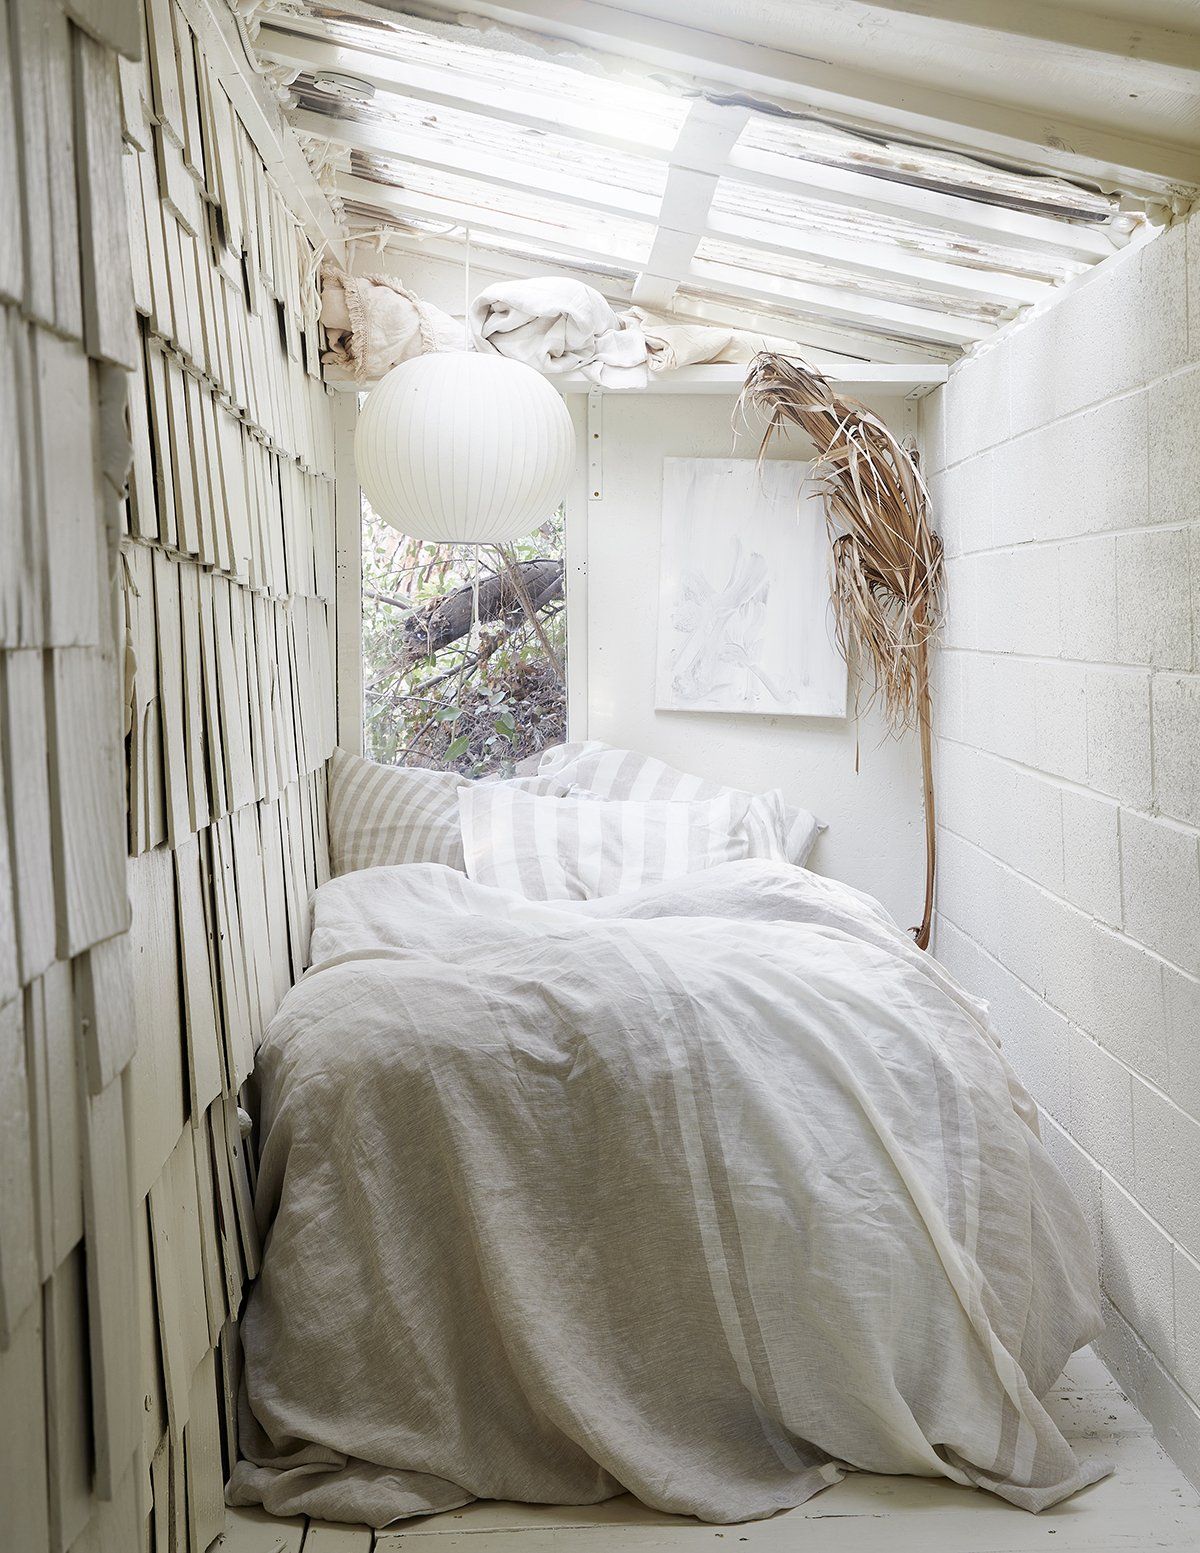 89 bedroom ideas from the world's best interior designers | House & Garden